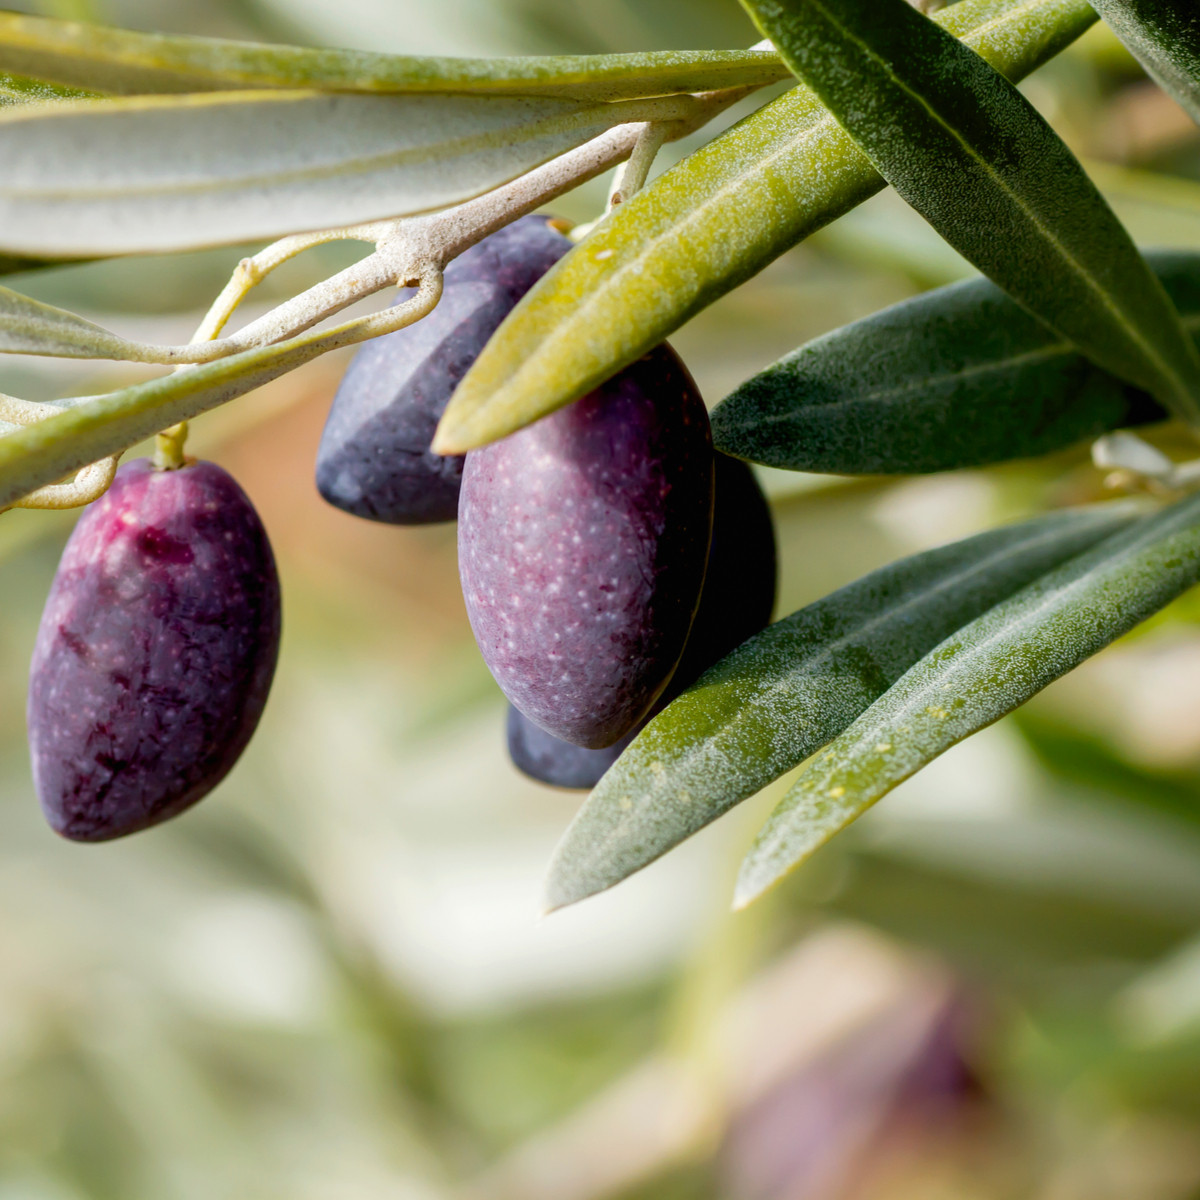 Olivovník evropský - Olea europeae - semena olivovníku - 5 ks